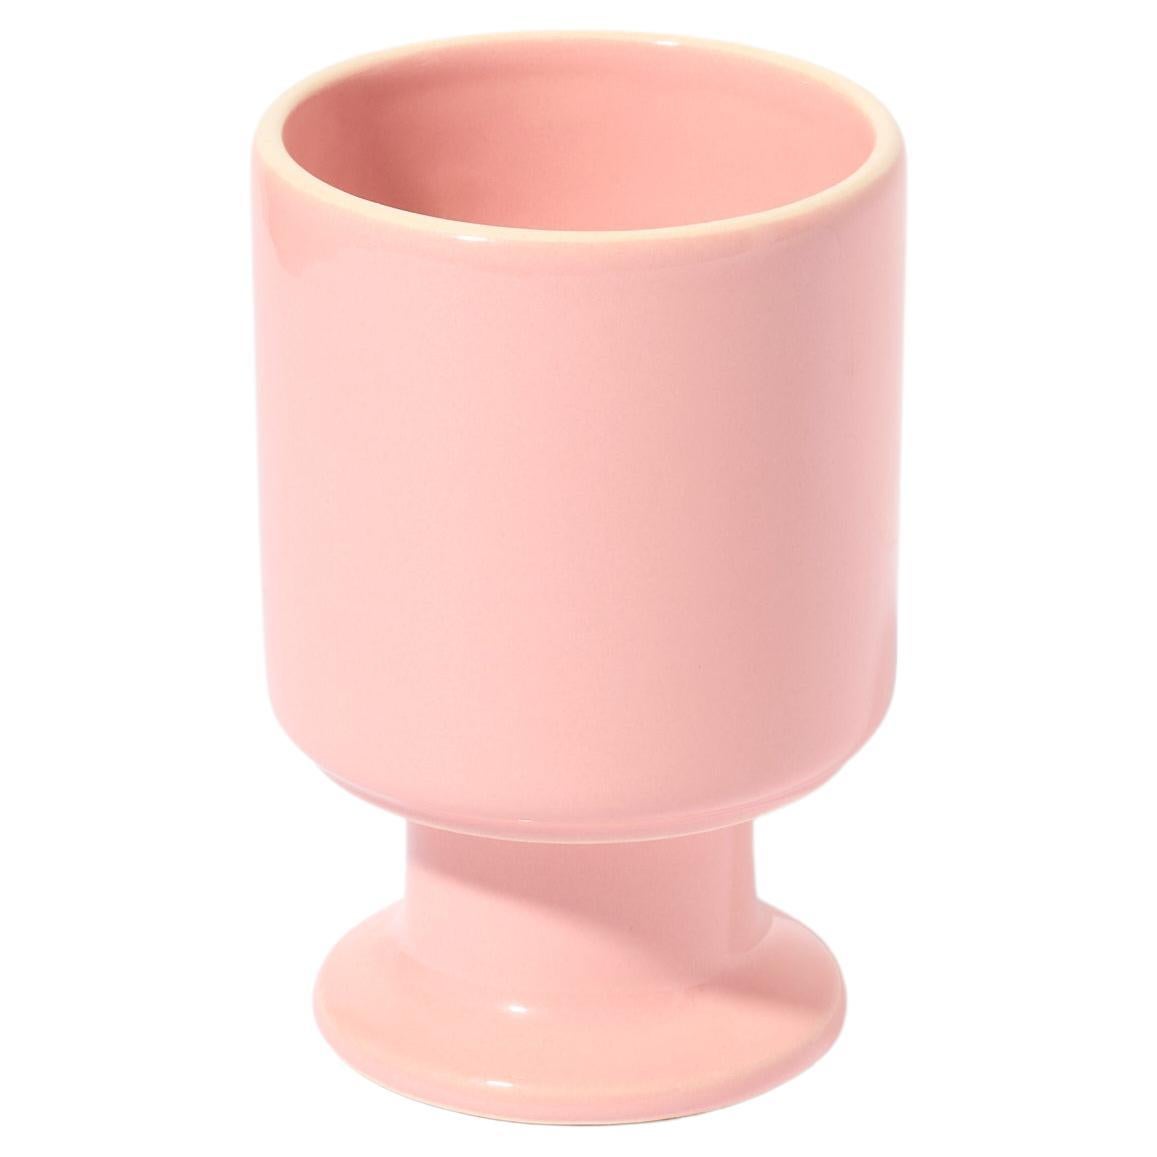 WIT Mug / Candy pink by Malwina Konopacka For Sale